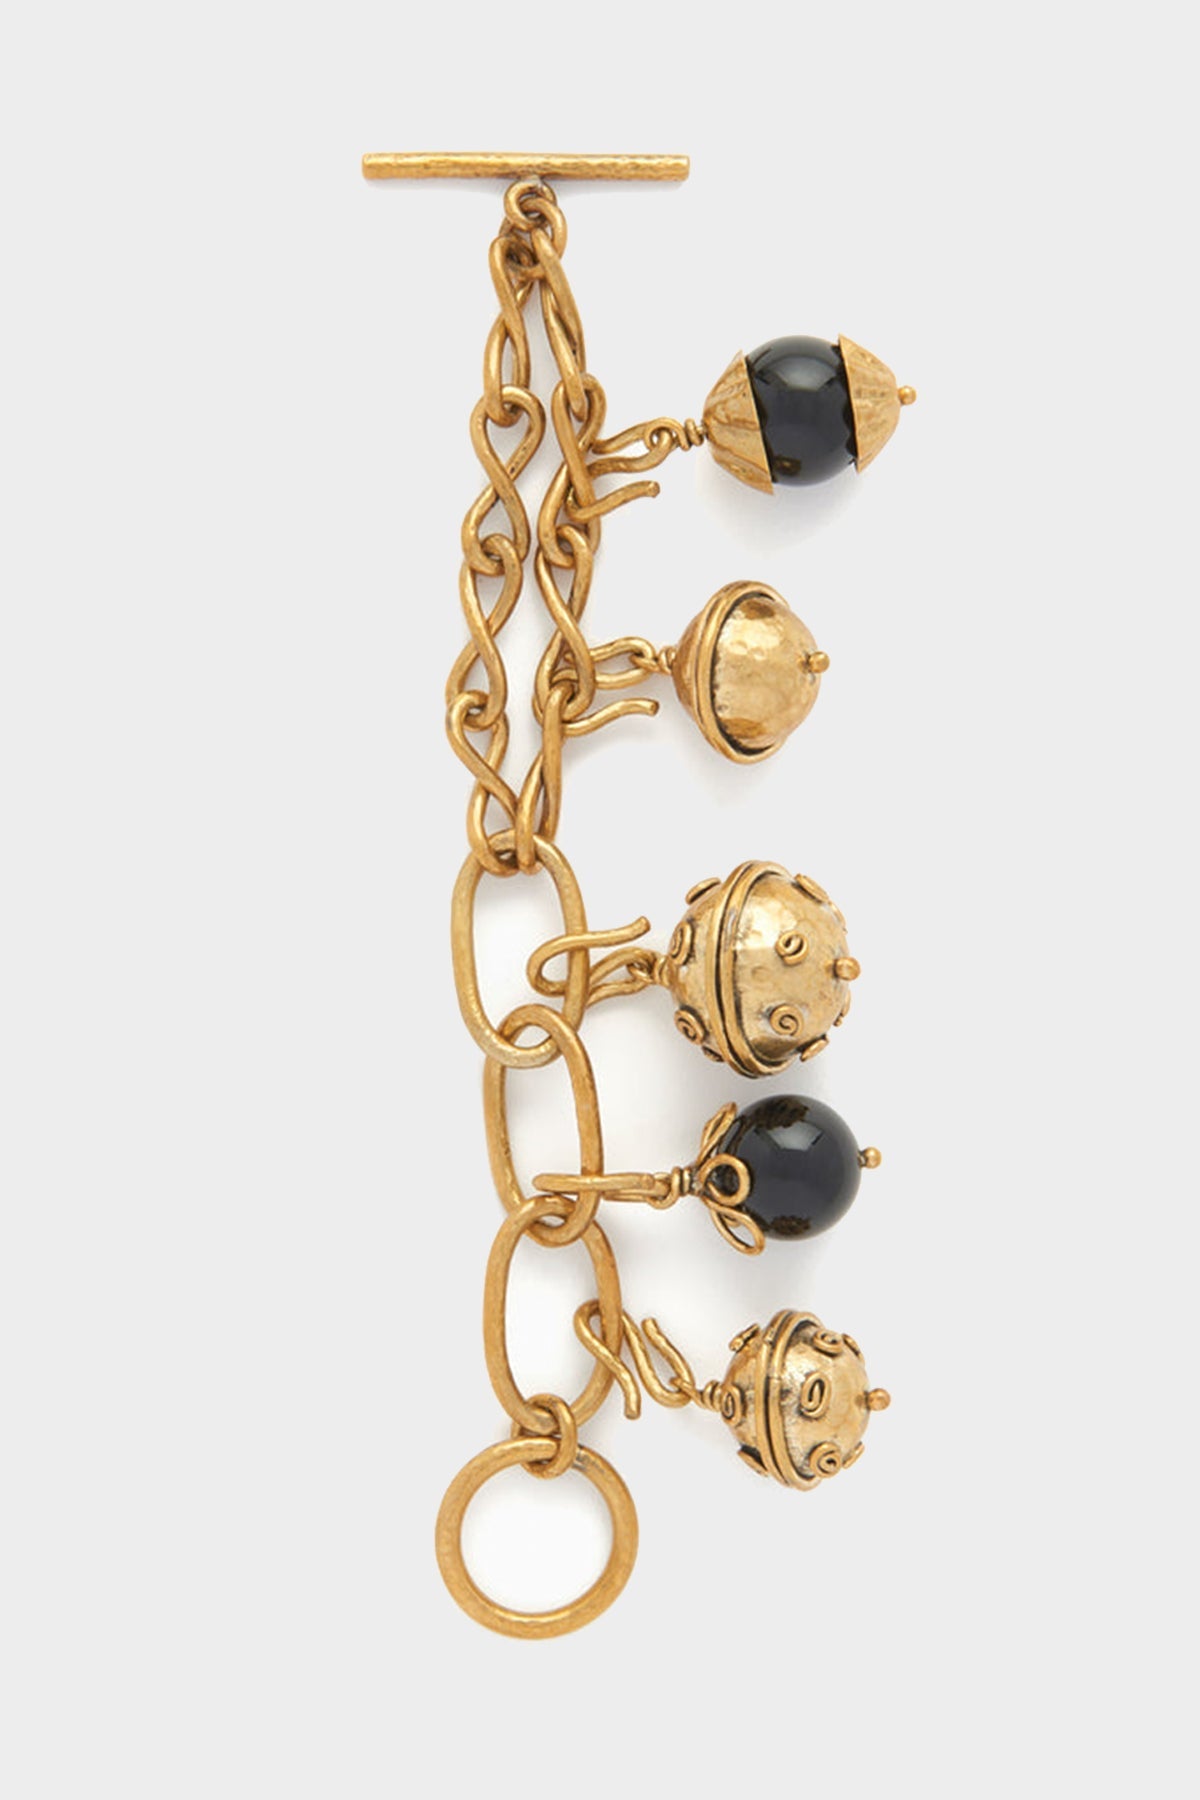 Ceres Charm Bracelet in Black Onix - shop-olivia.com